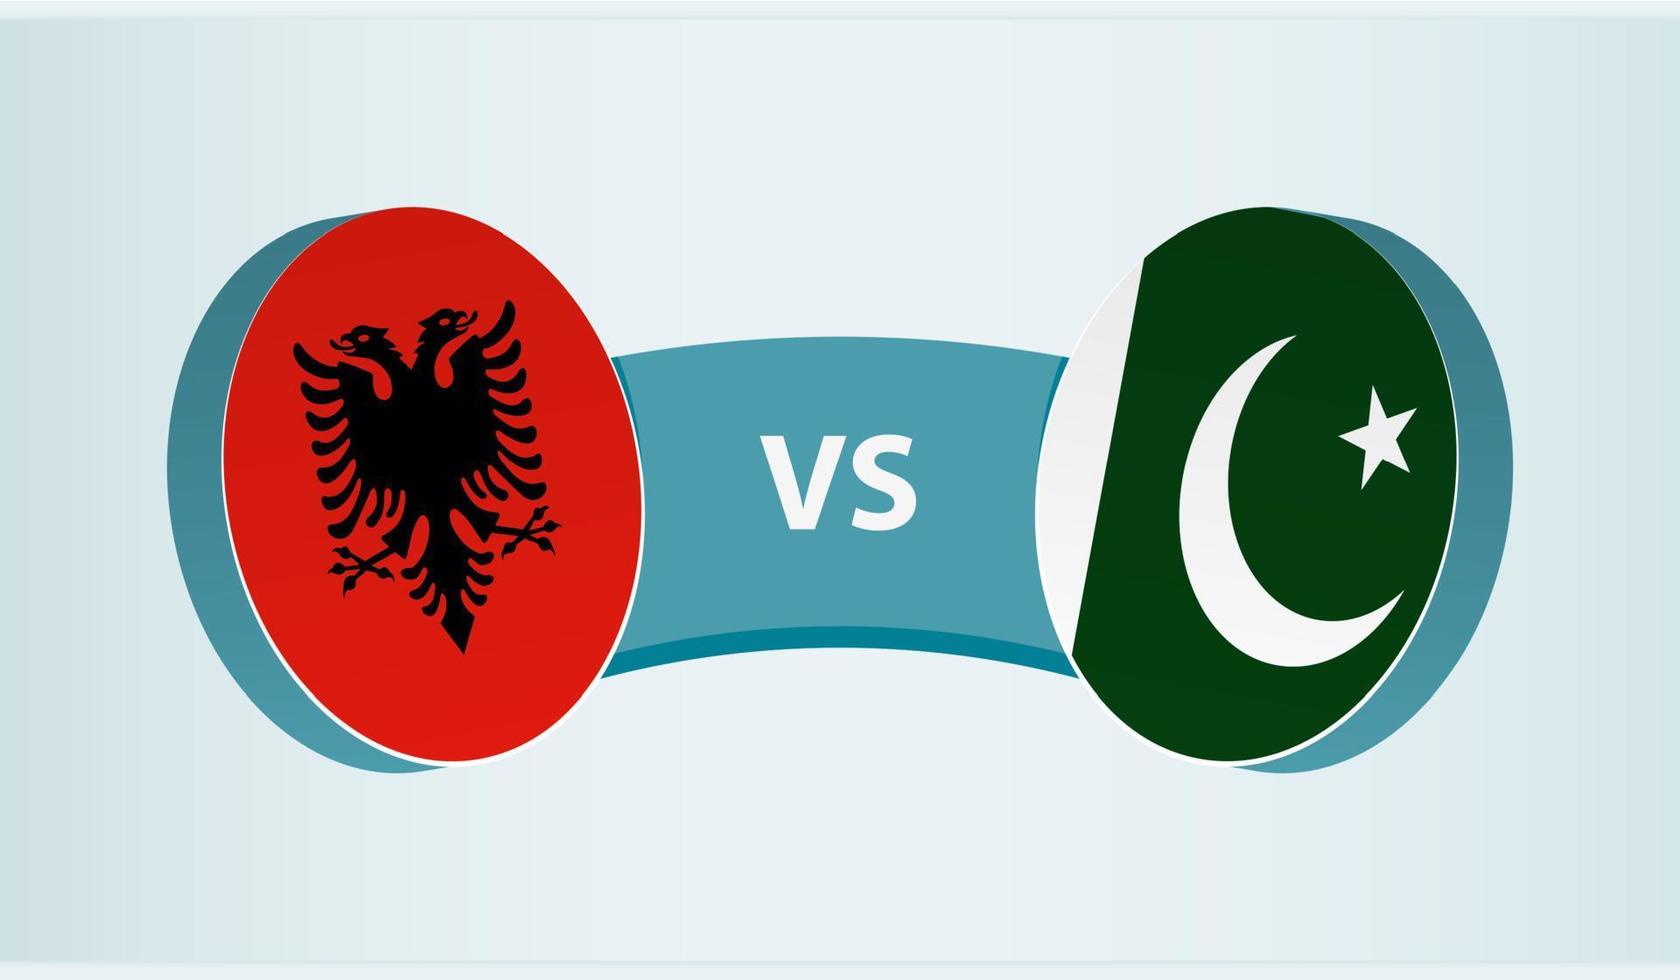 Albania versus Pakistan, team sports competition concept. vector